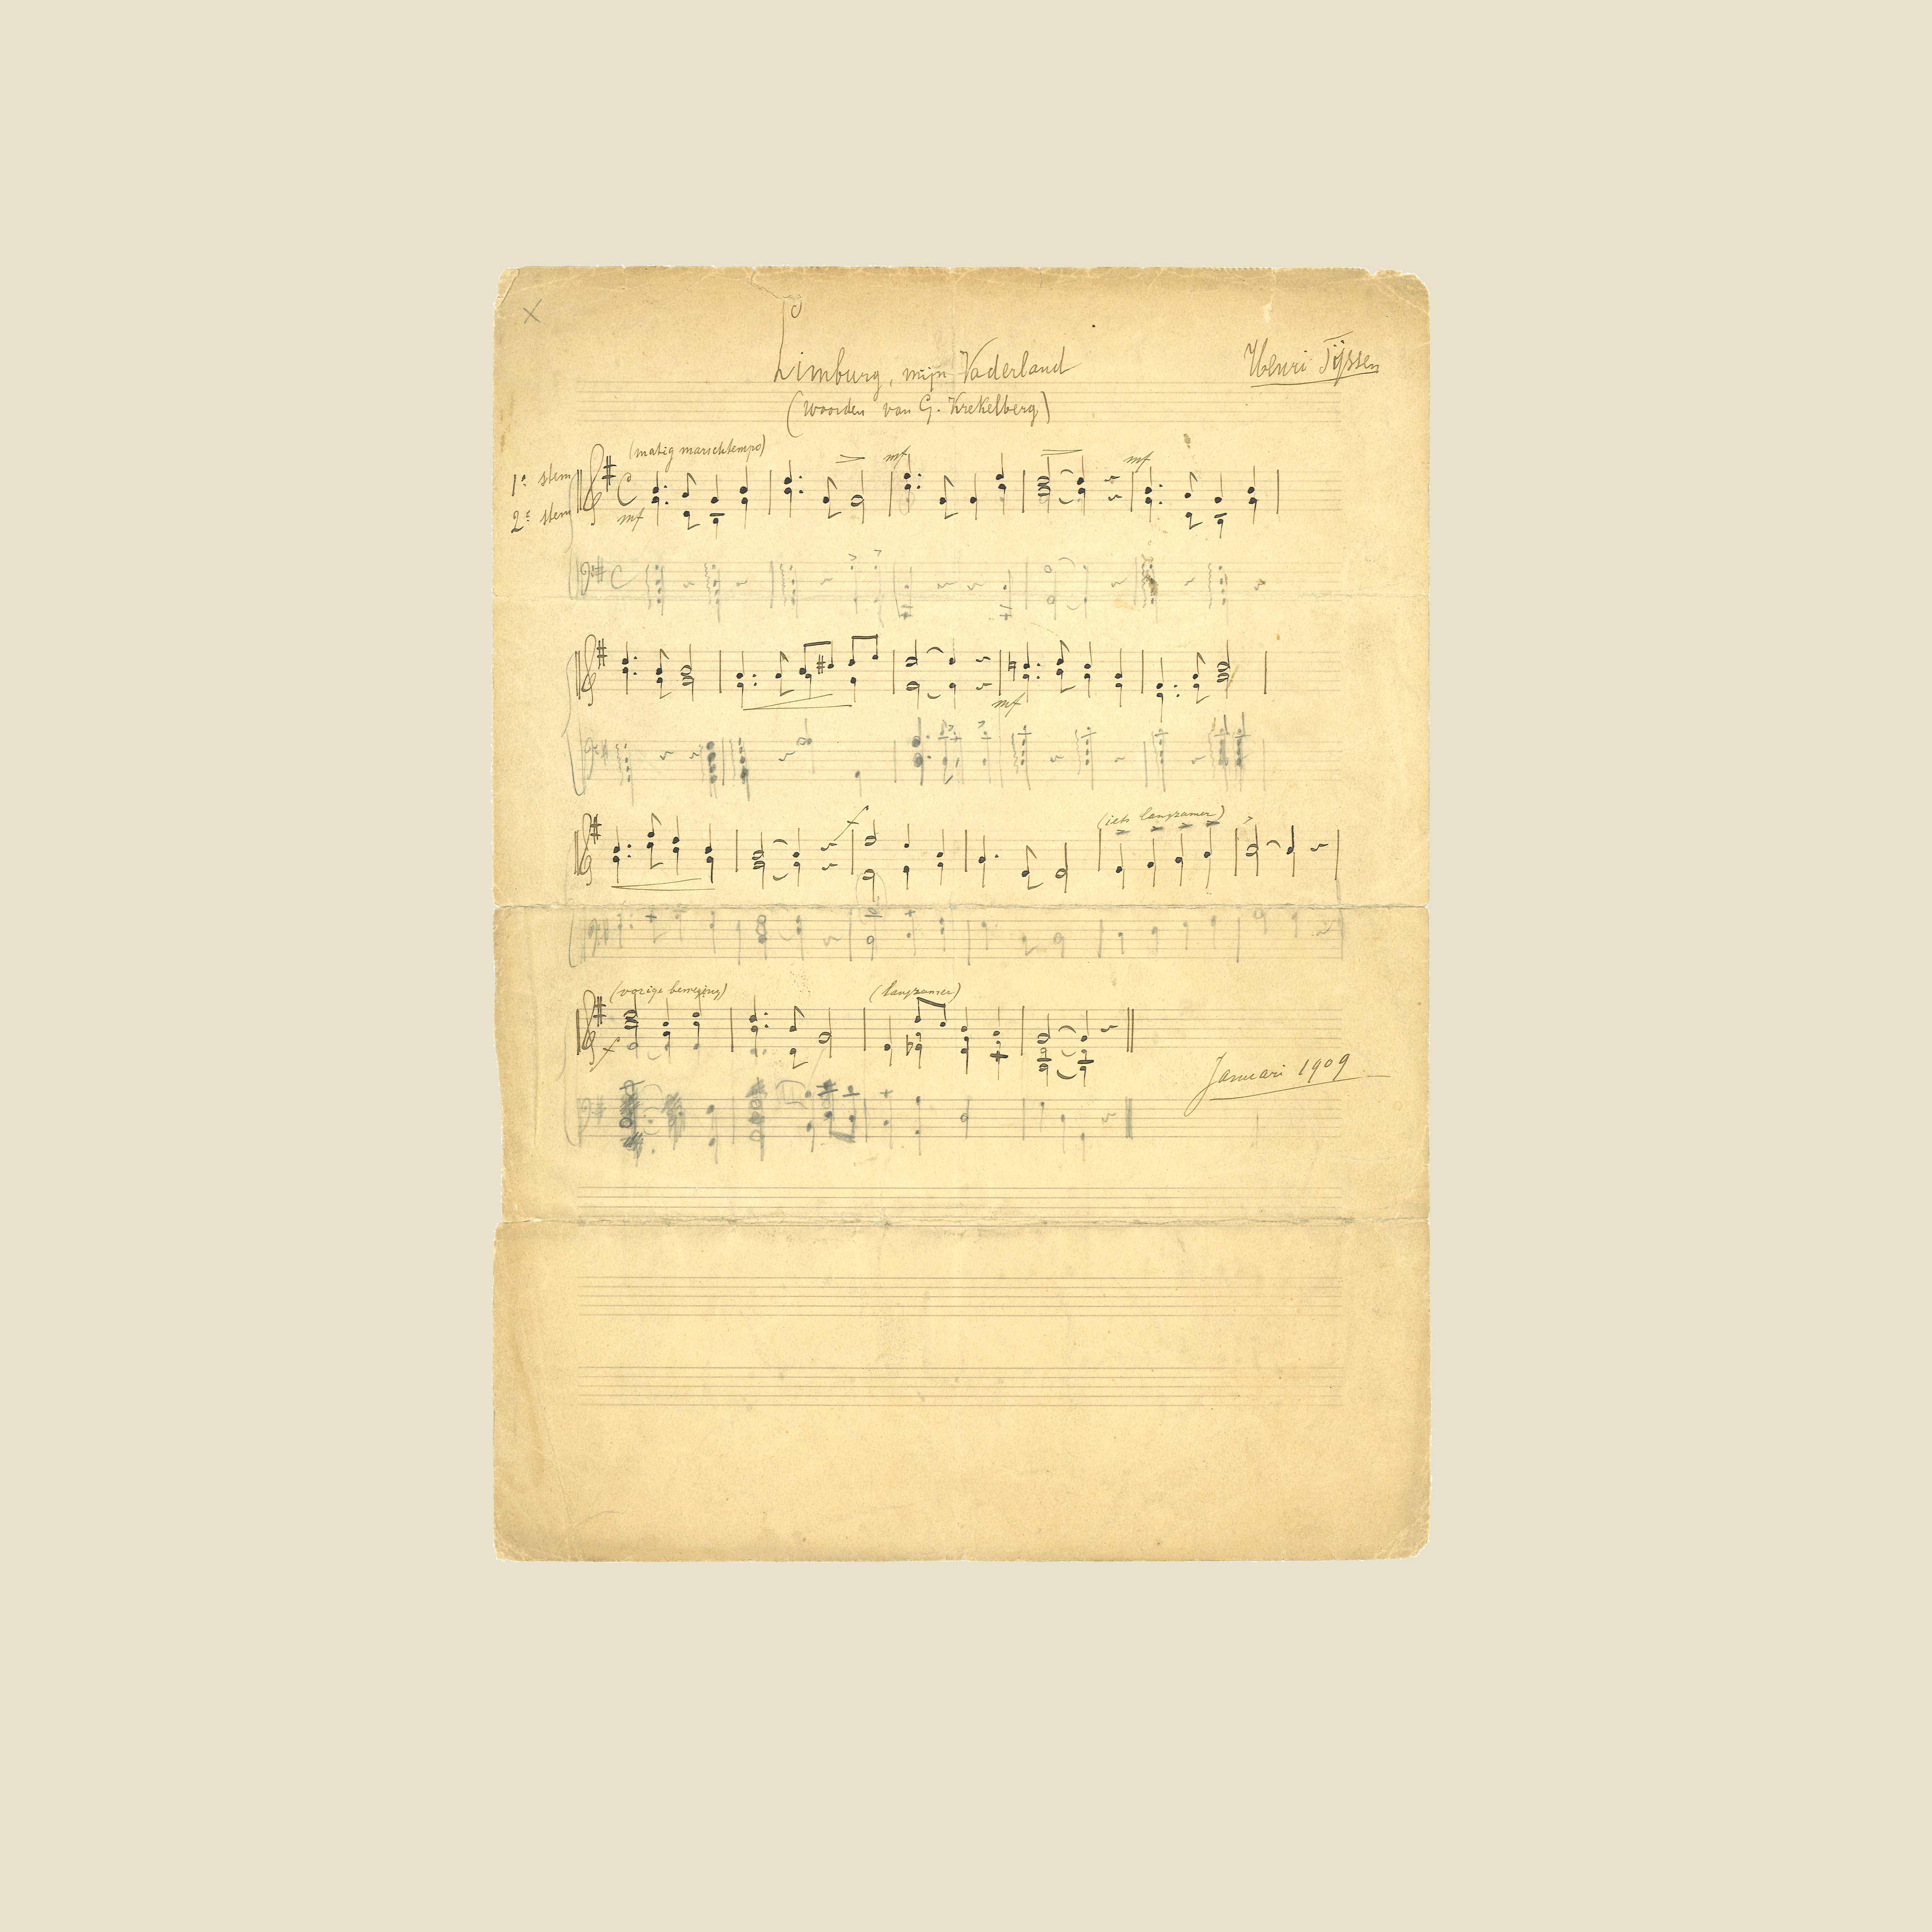 archiefroermond-manuscript-limburgs-volkslied.jpg